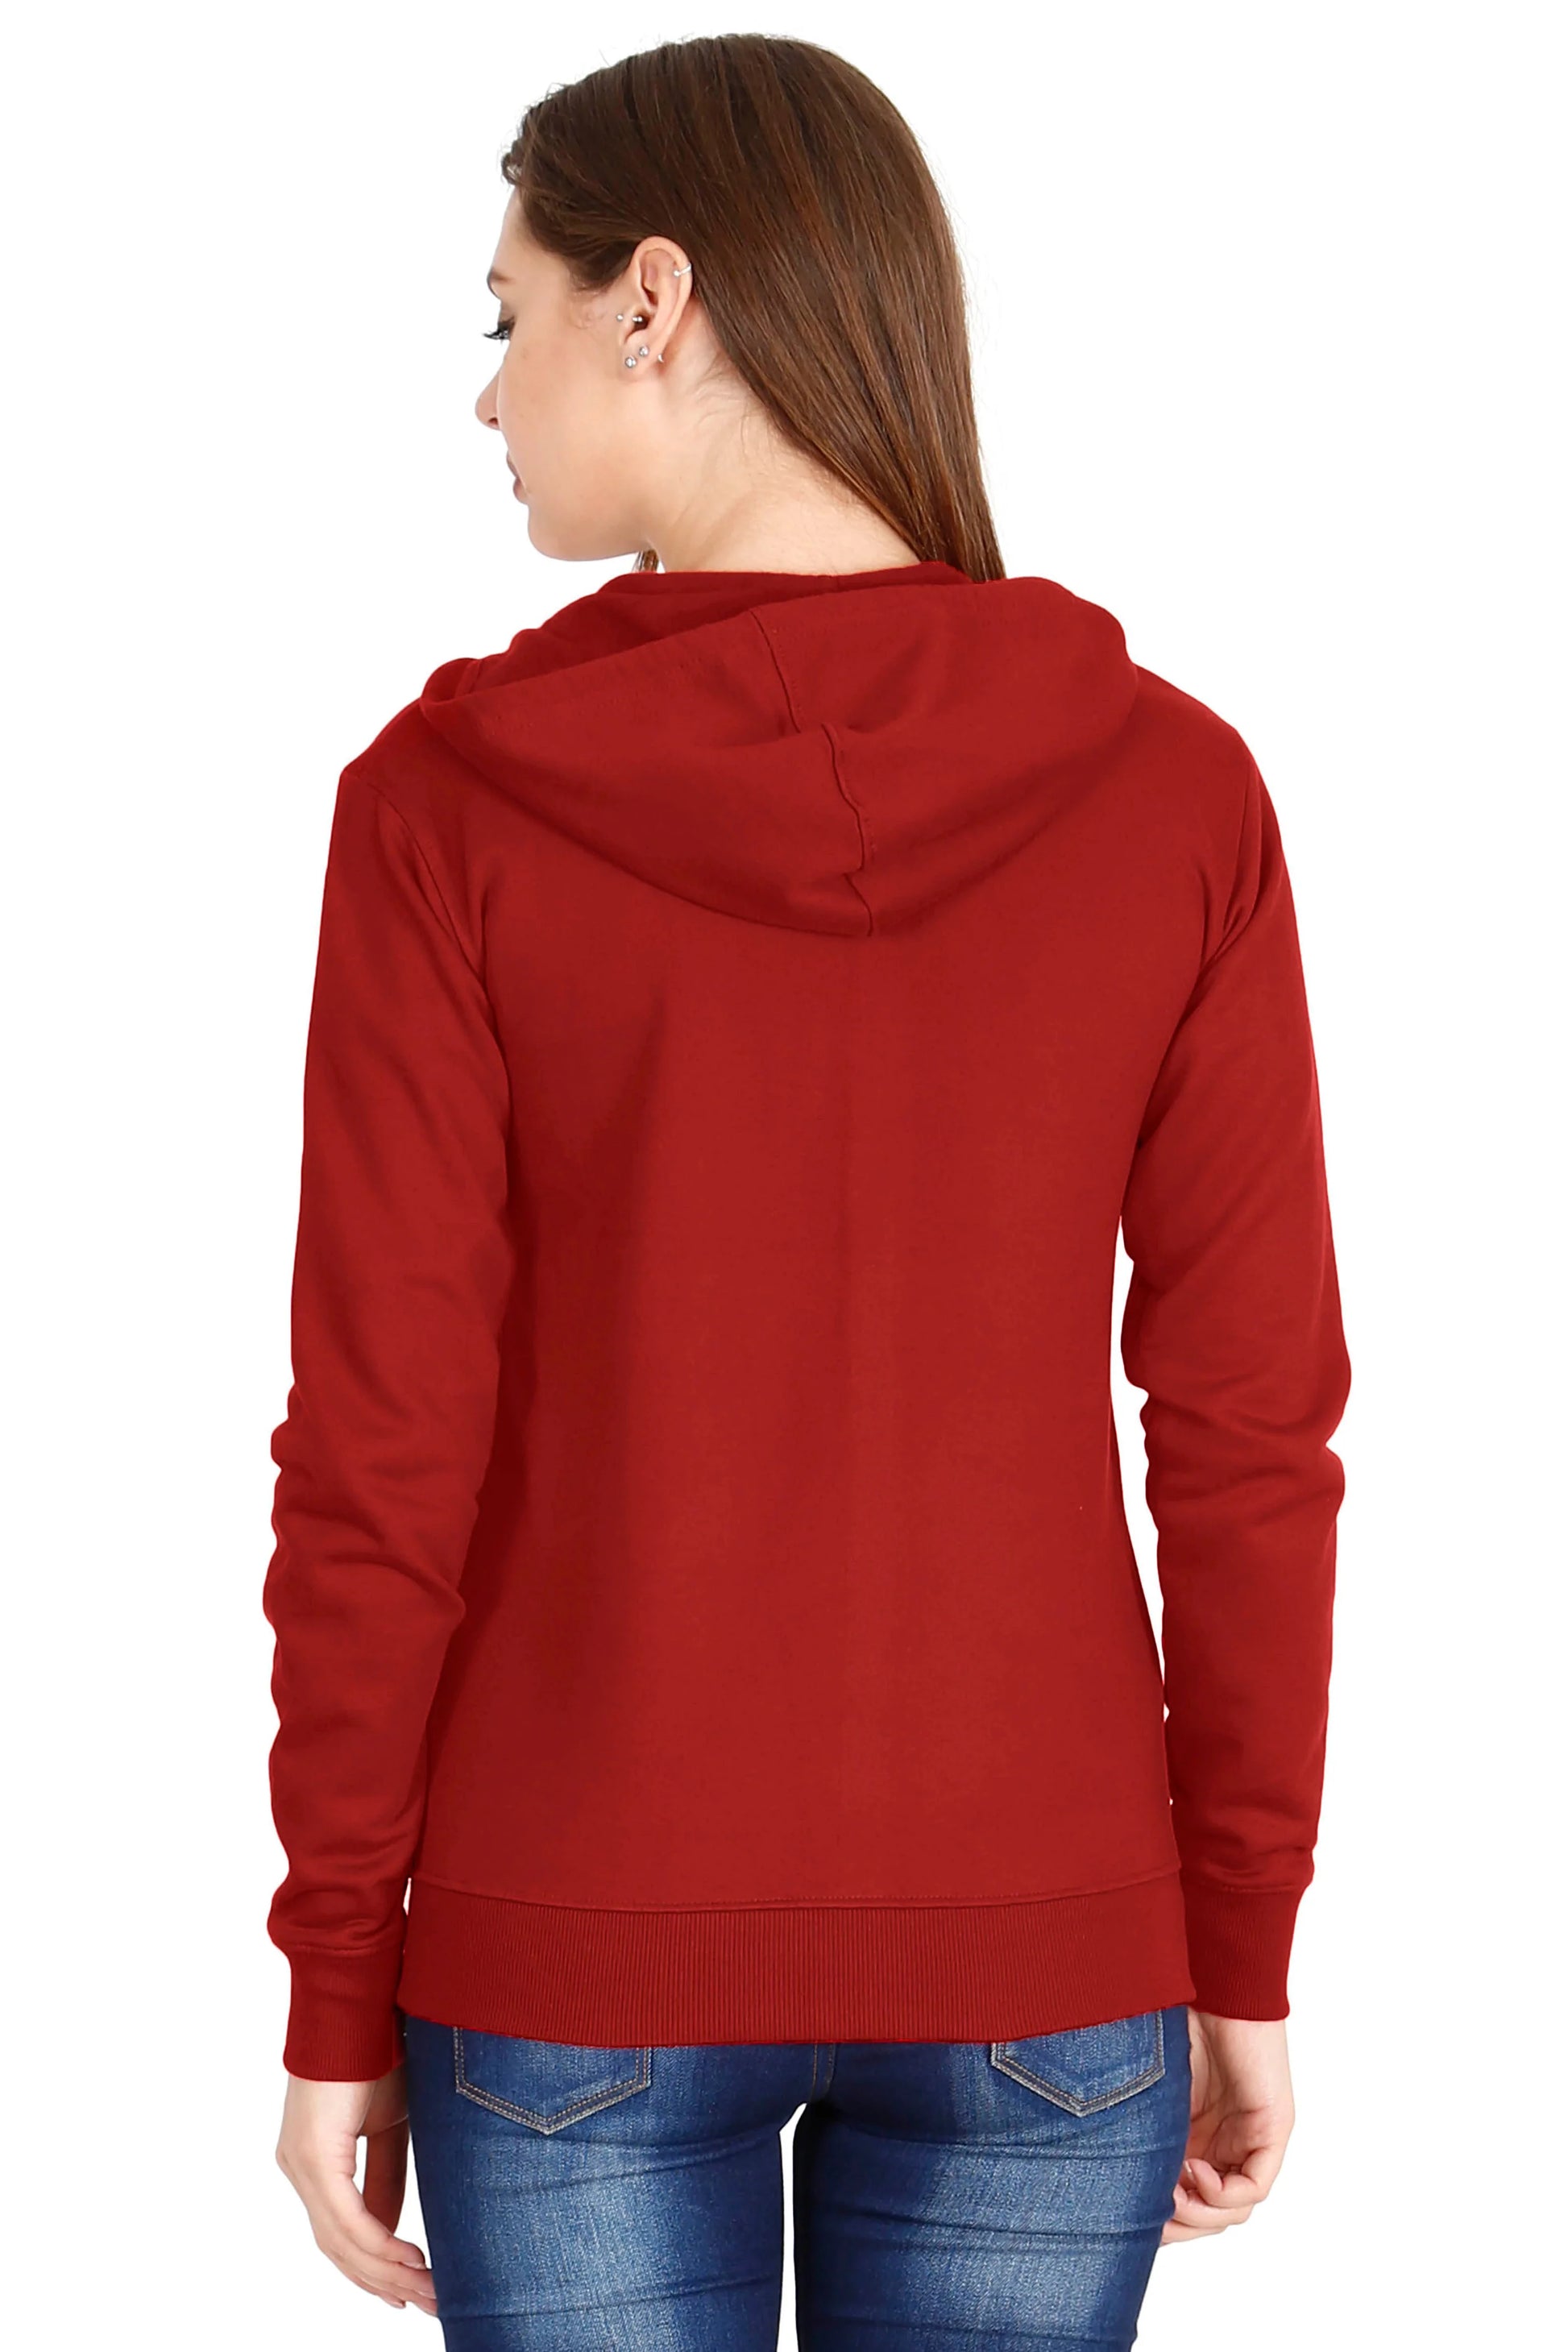 Fleximaa Womens Cotton Plain Full Sleeve Hoodies/Sweatshirt for Winter